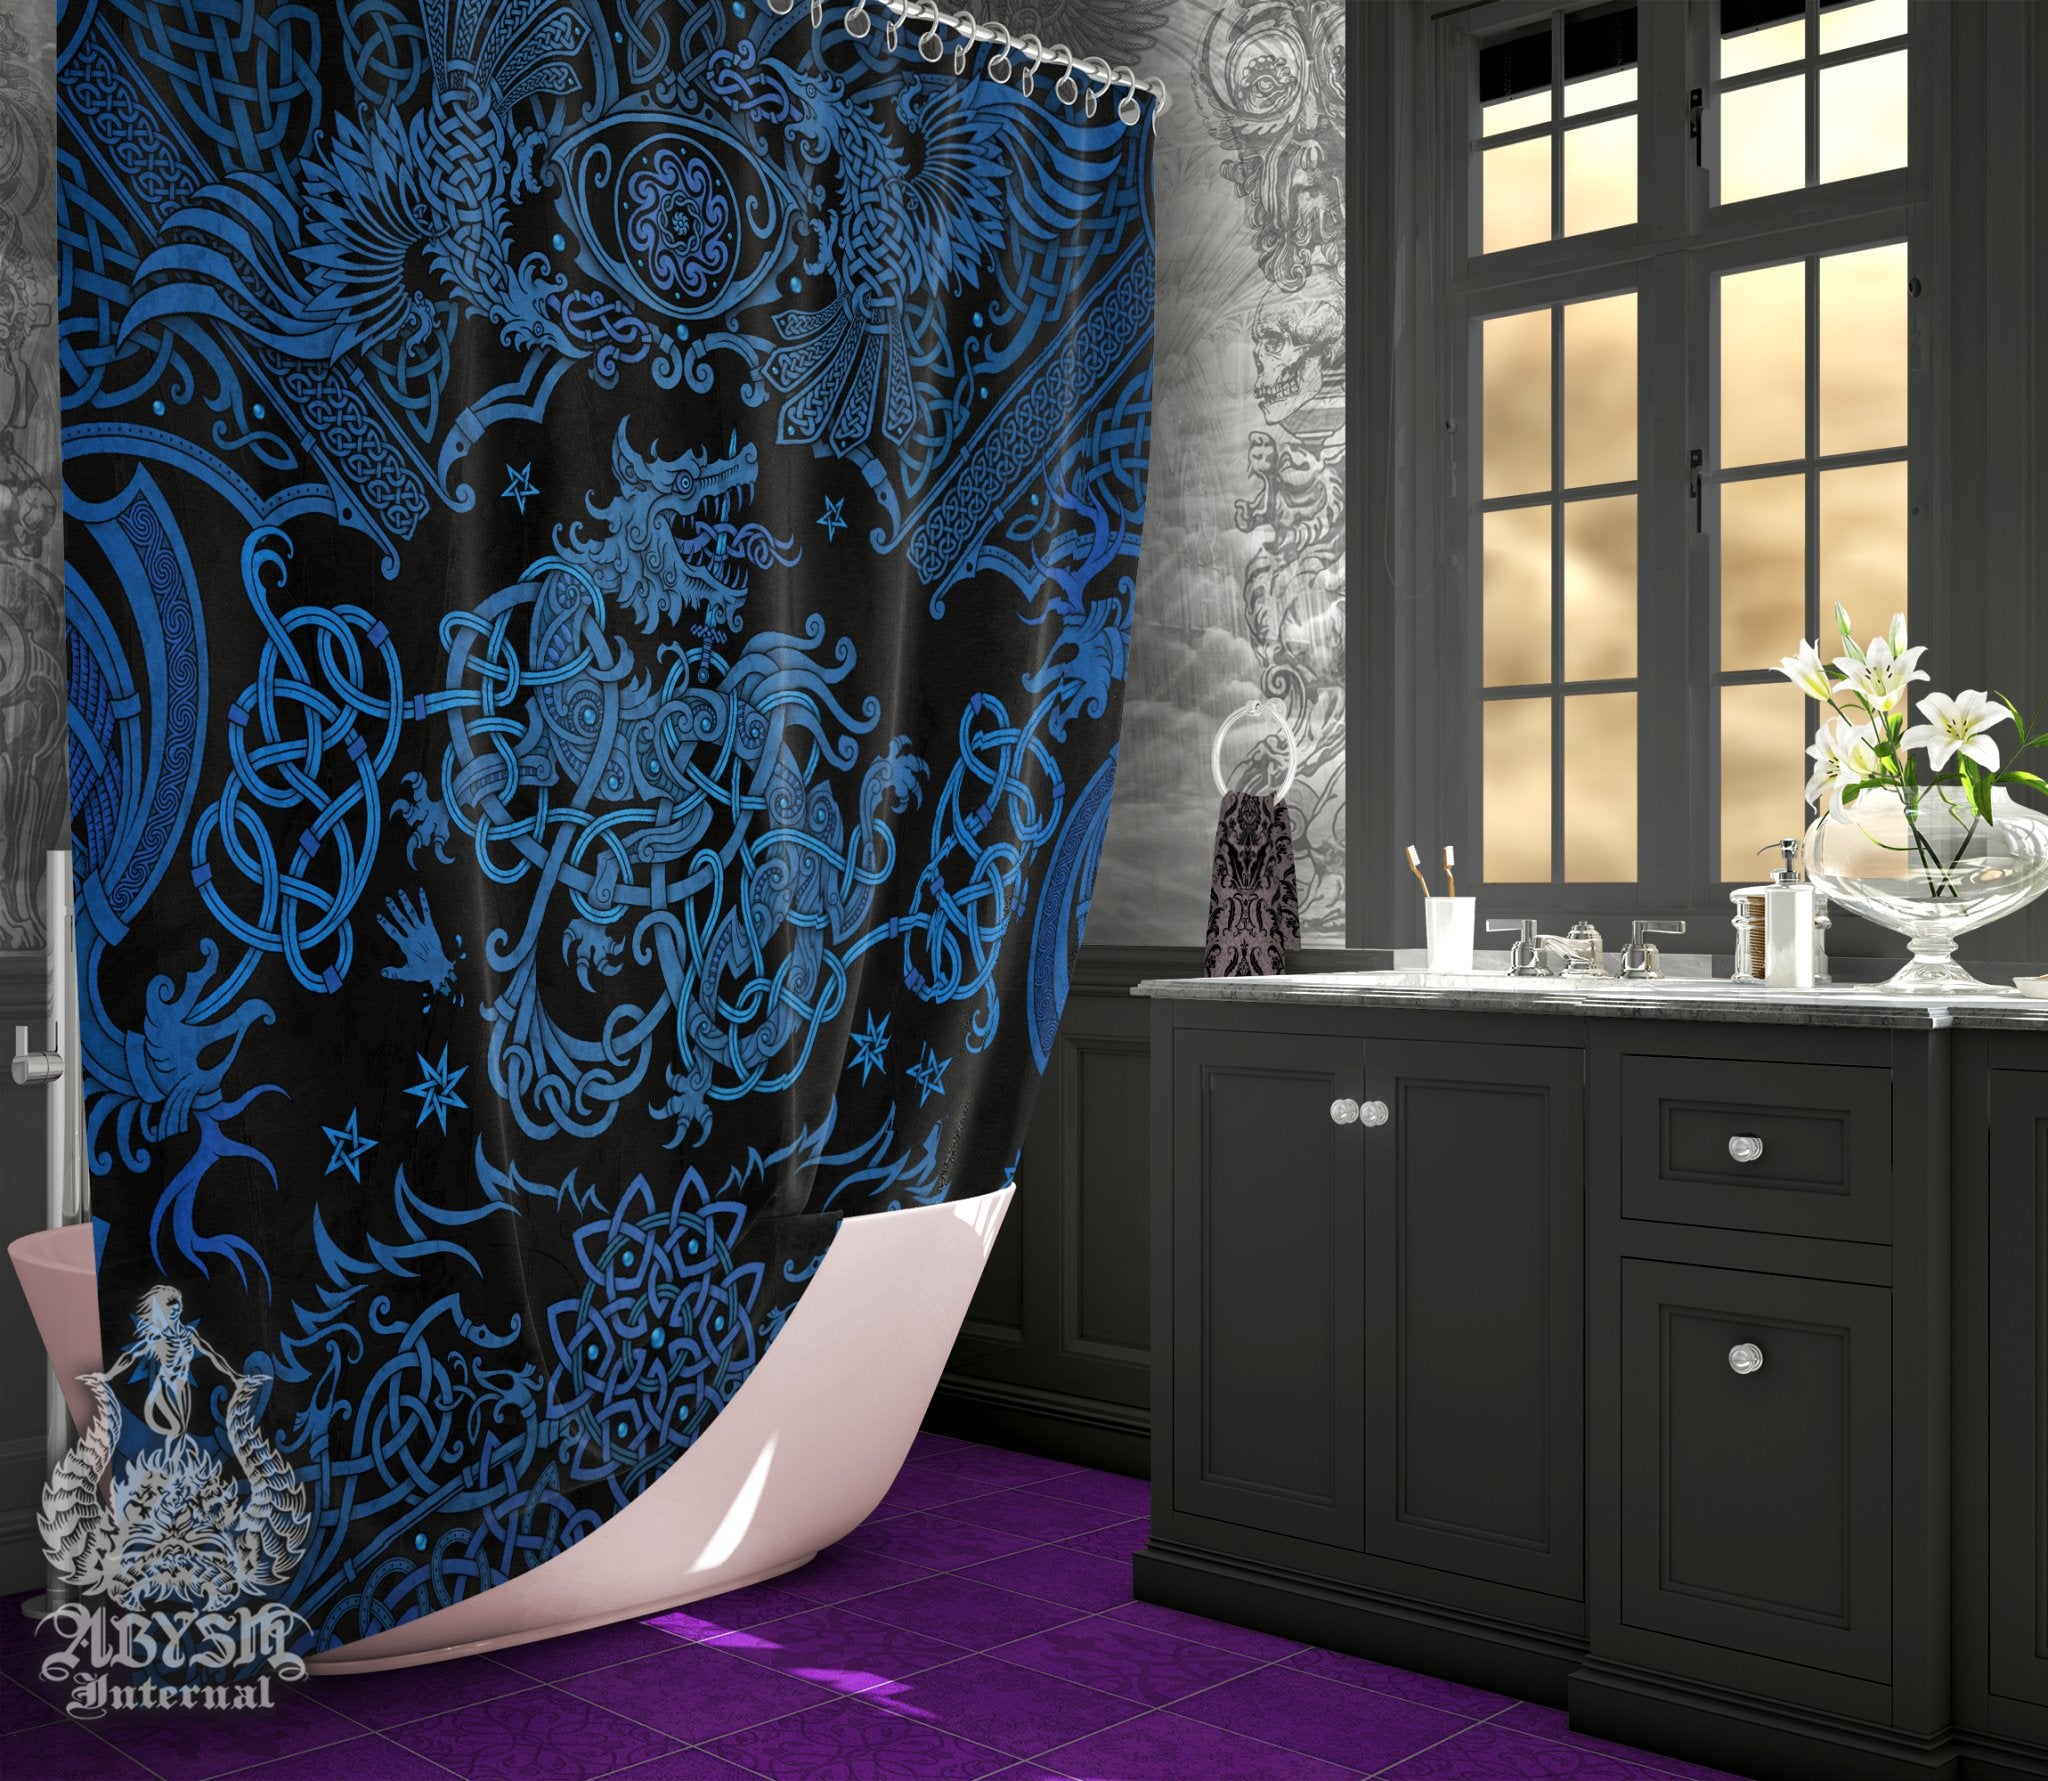 Nordic Wolf Shower Curtain, 71x74 inches, Old Norse Bathroom Decor, Viking Fenrir Art Print - Black Blue - Abysm Internal